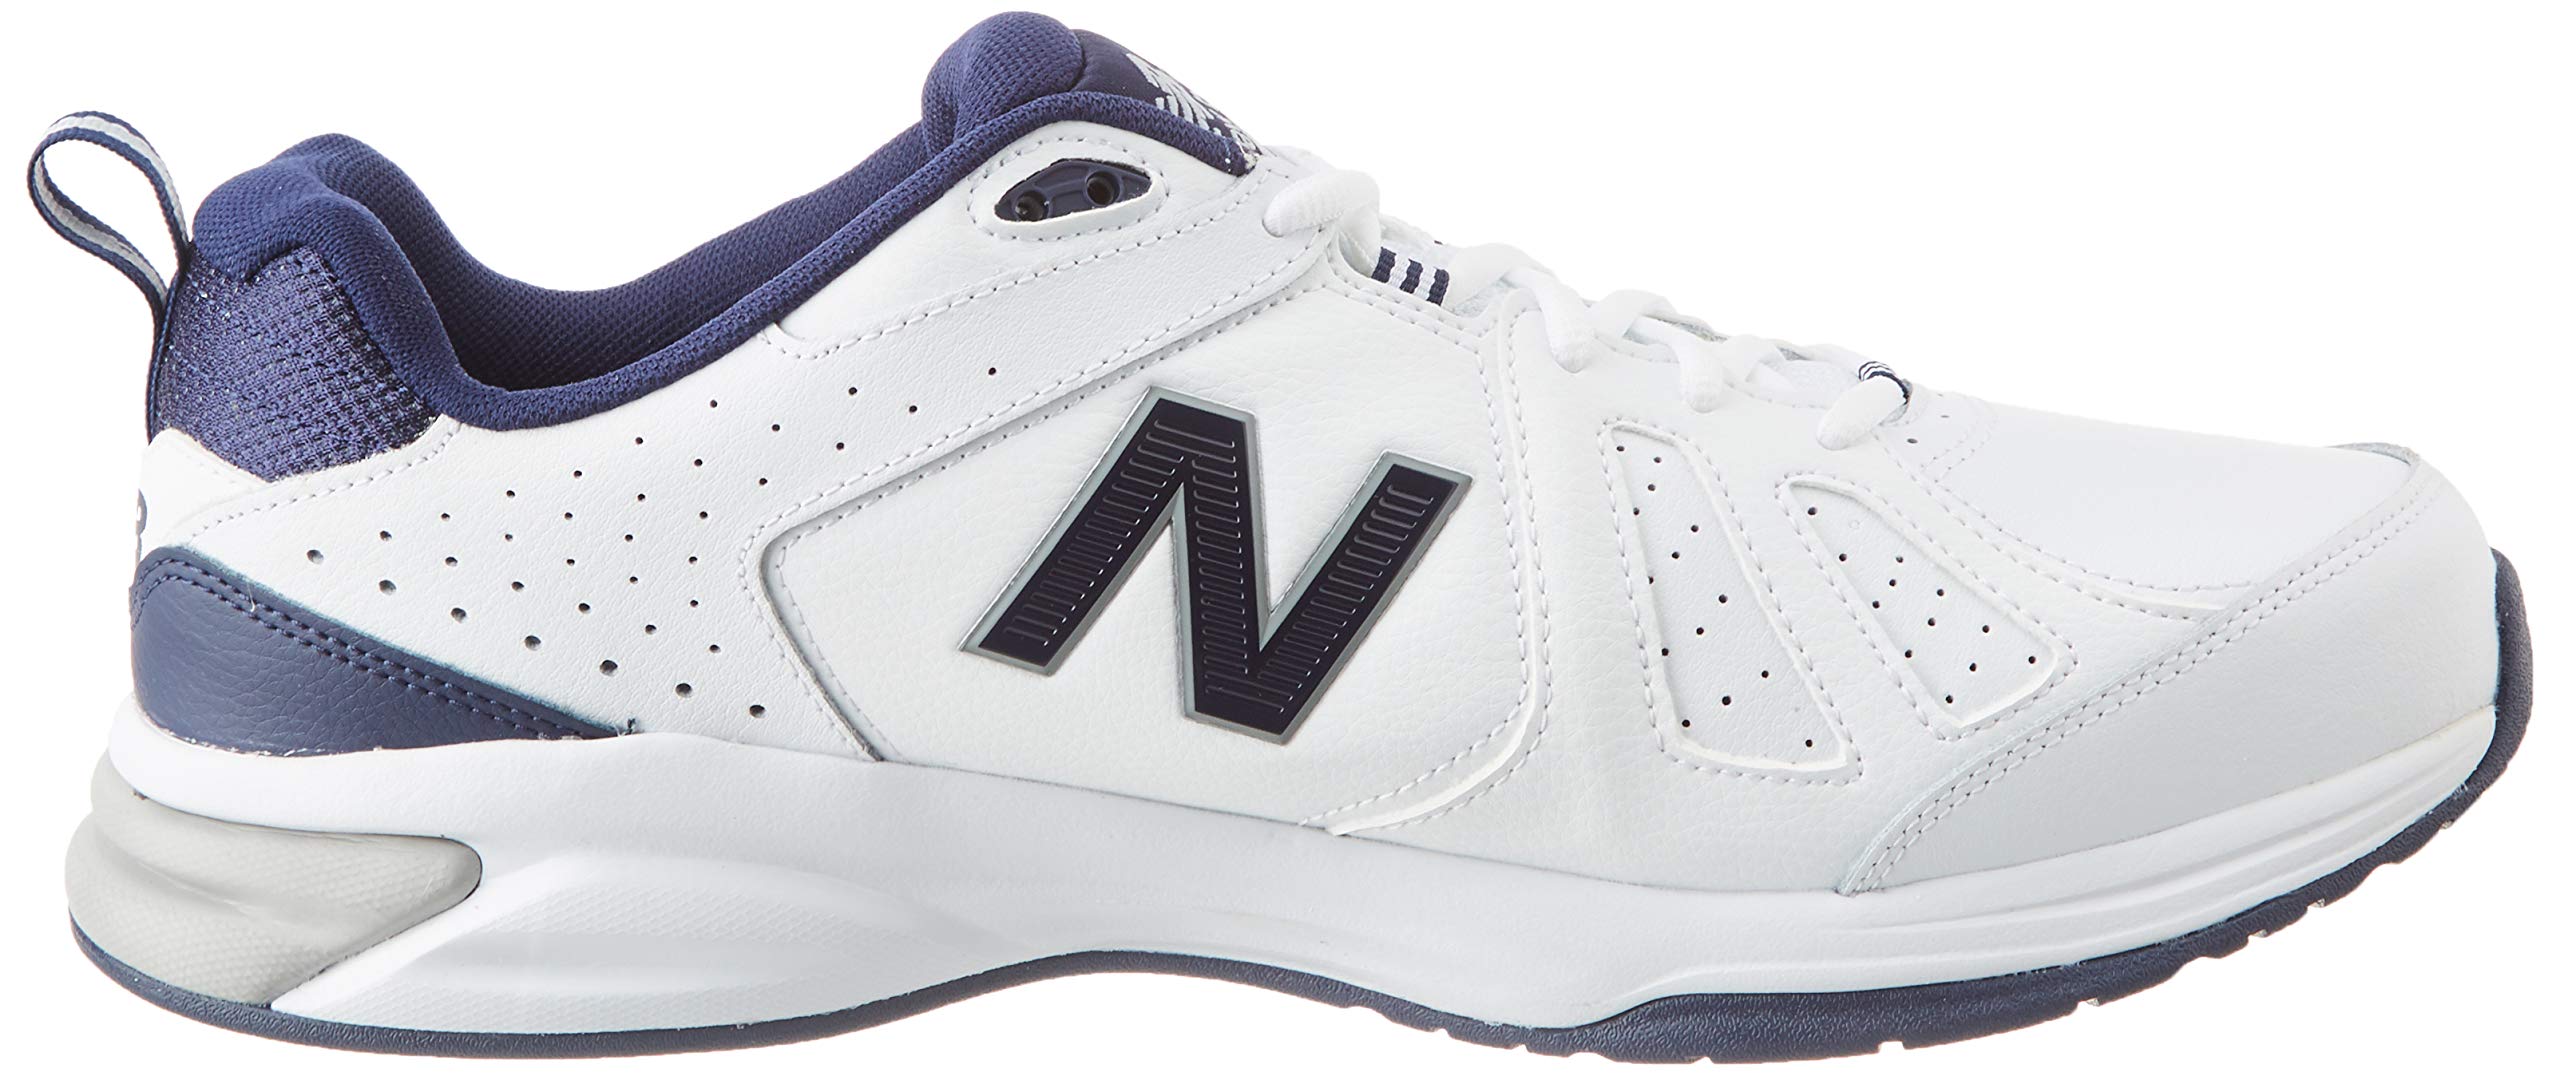 New Balance Men's 624v5' Cross Trainer, White (White), 19.5 UK XX Wide